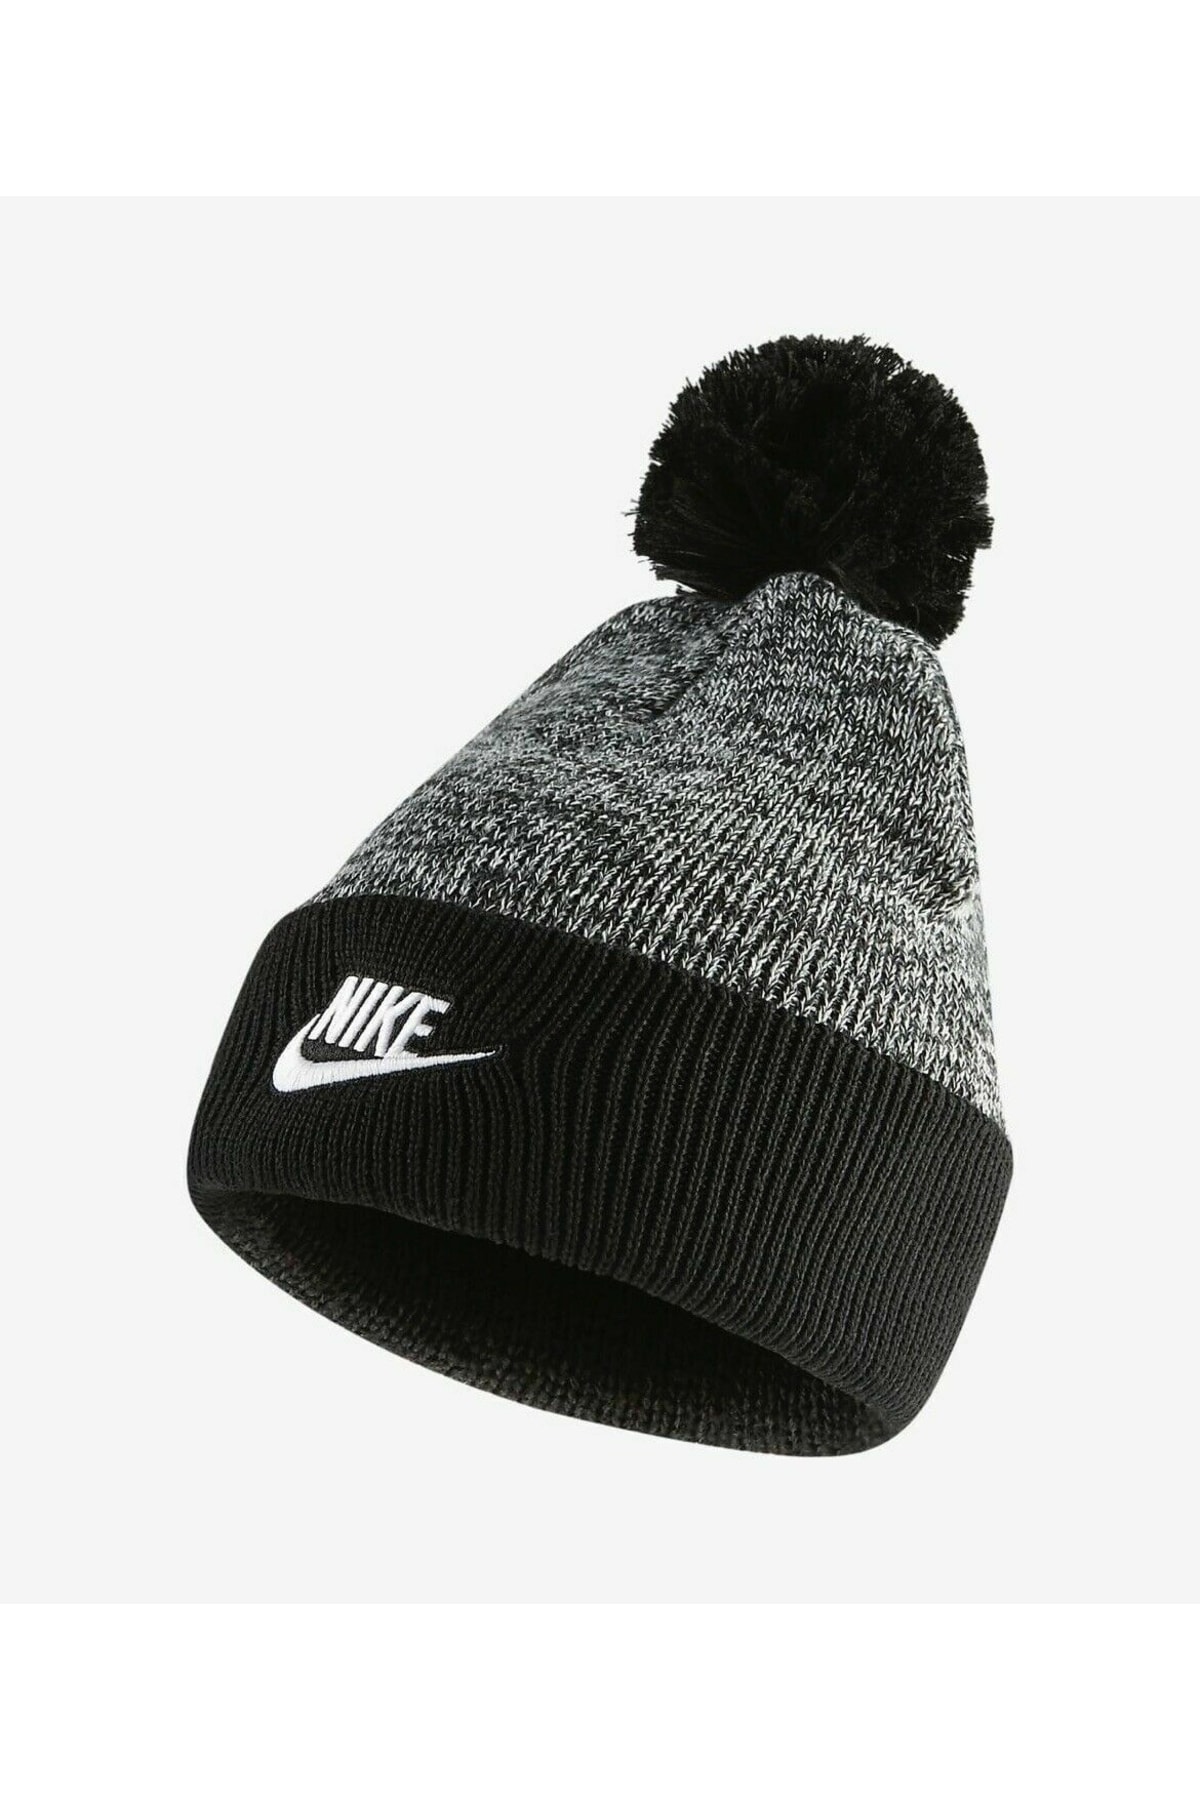 Nike Sportswear Thick Warm Beanie Black Hat Cap Adult Unisex Osfm Unisex Şapka - Bere Dm8451-010